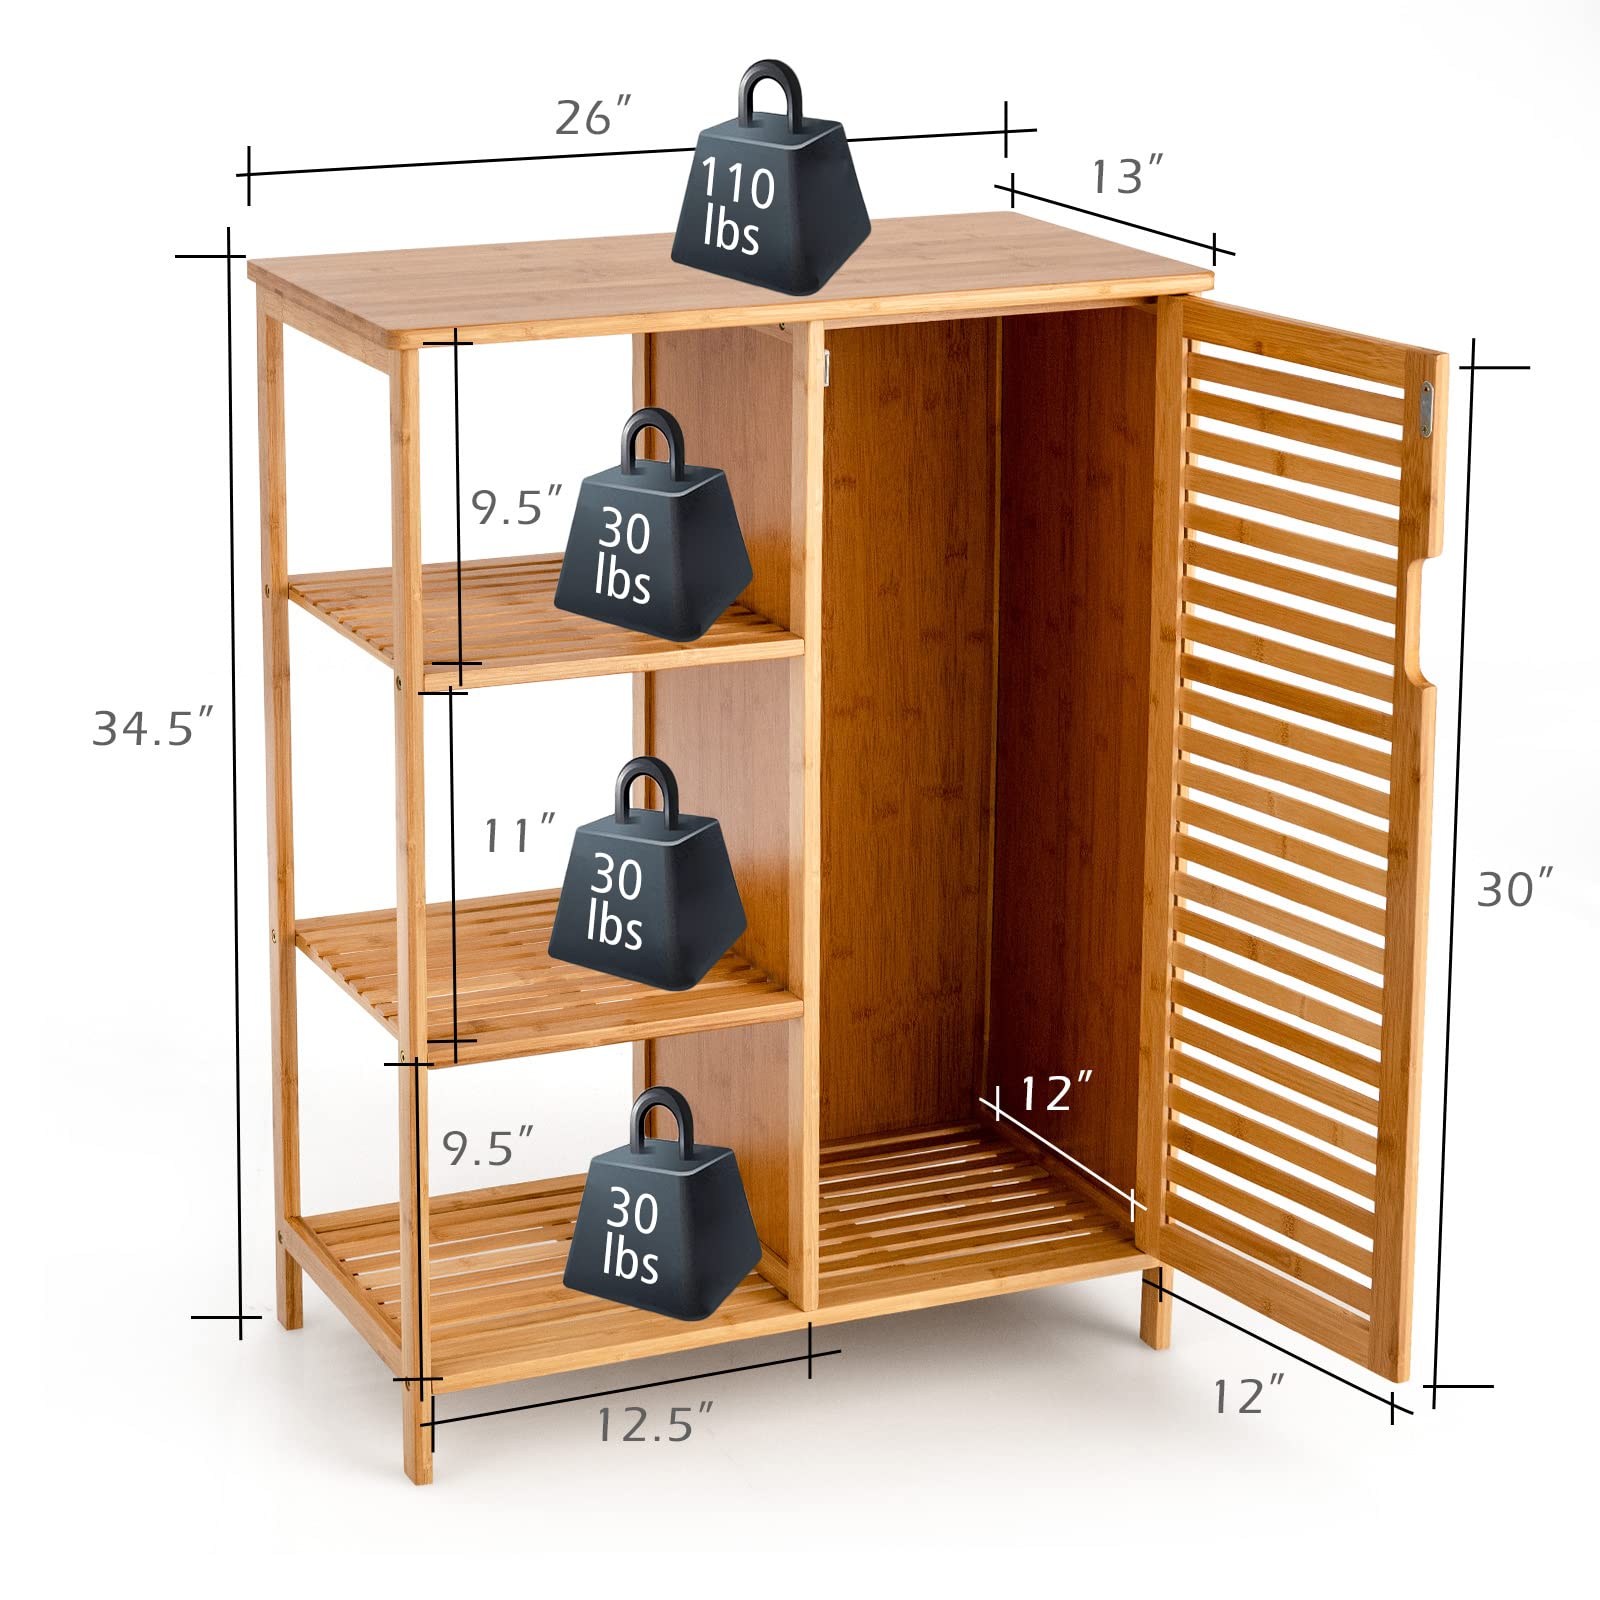 Bathroom Storage Cabinet Bamboo Floor Cabinet Free Standing Organizer - Giantex